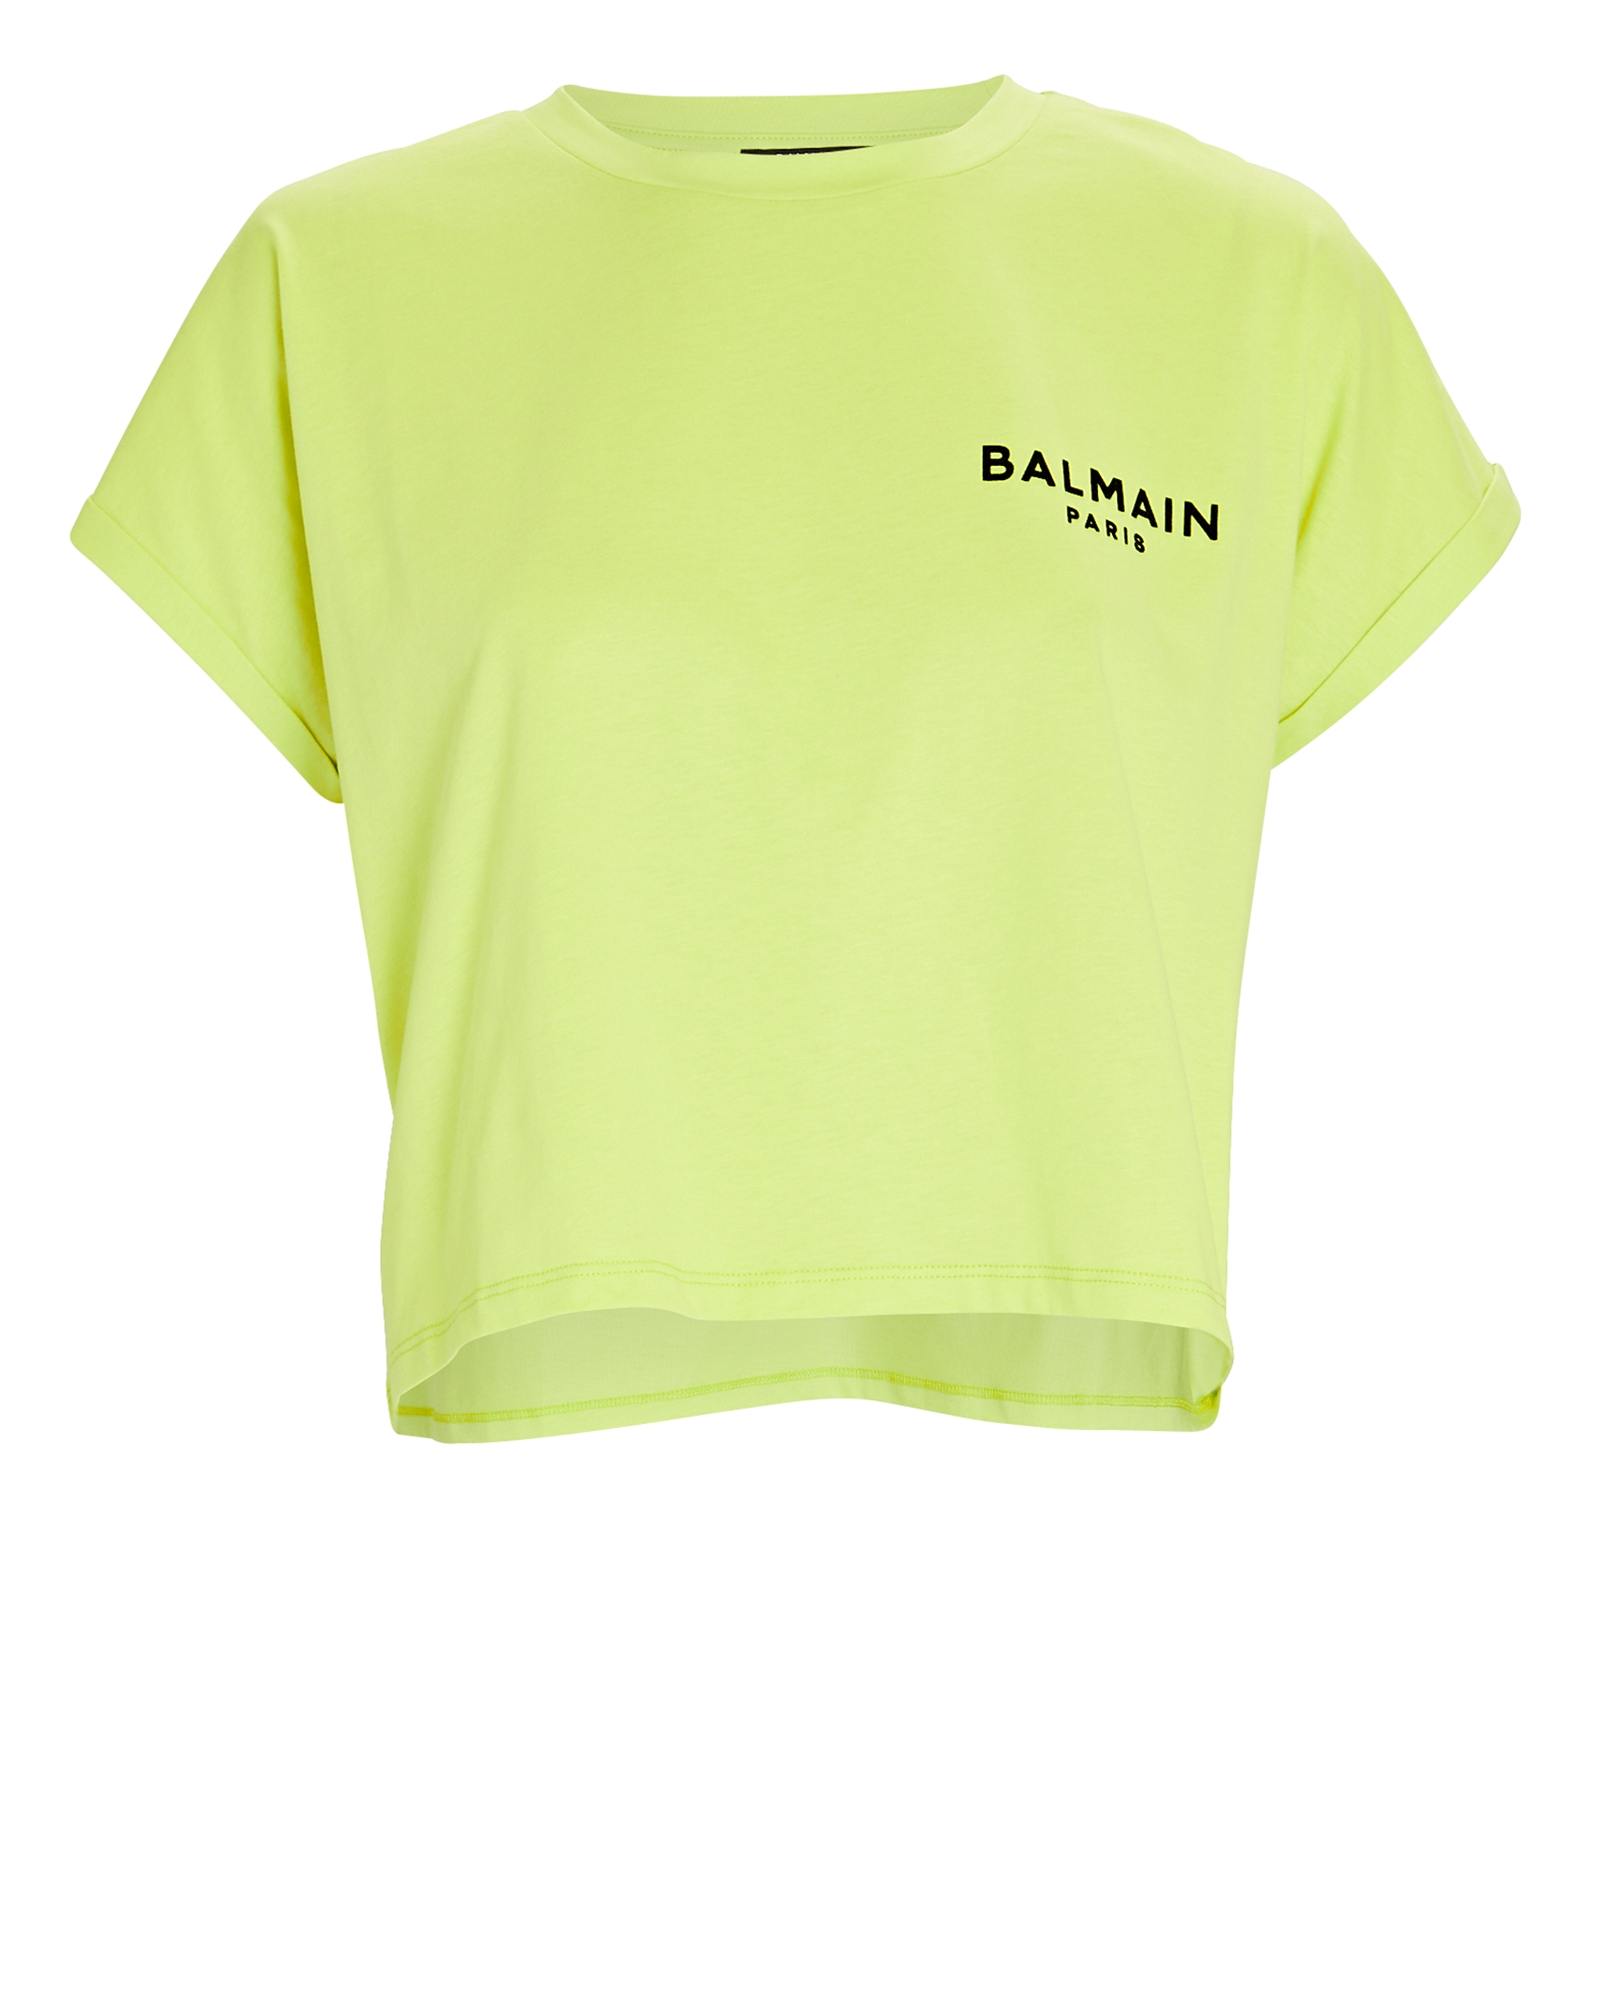 Balmain Cropped Logo T-Shirt | INTERMIX®